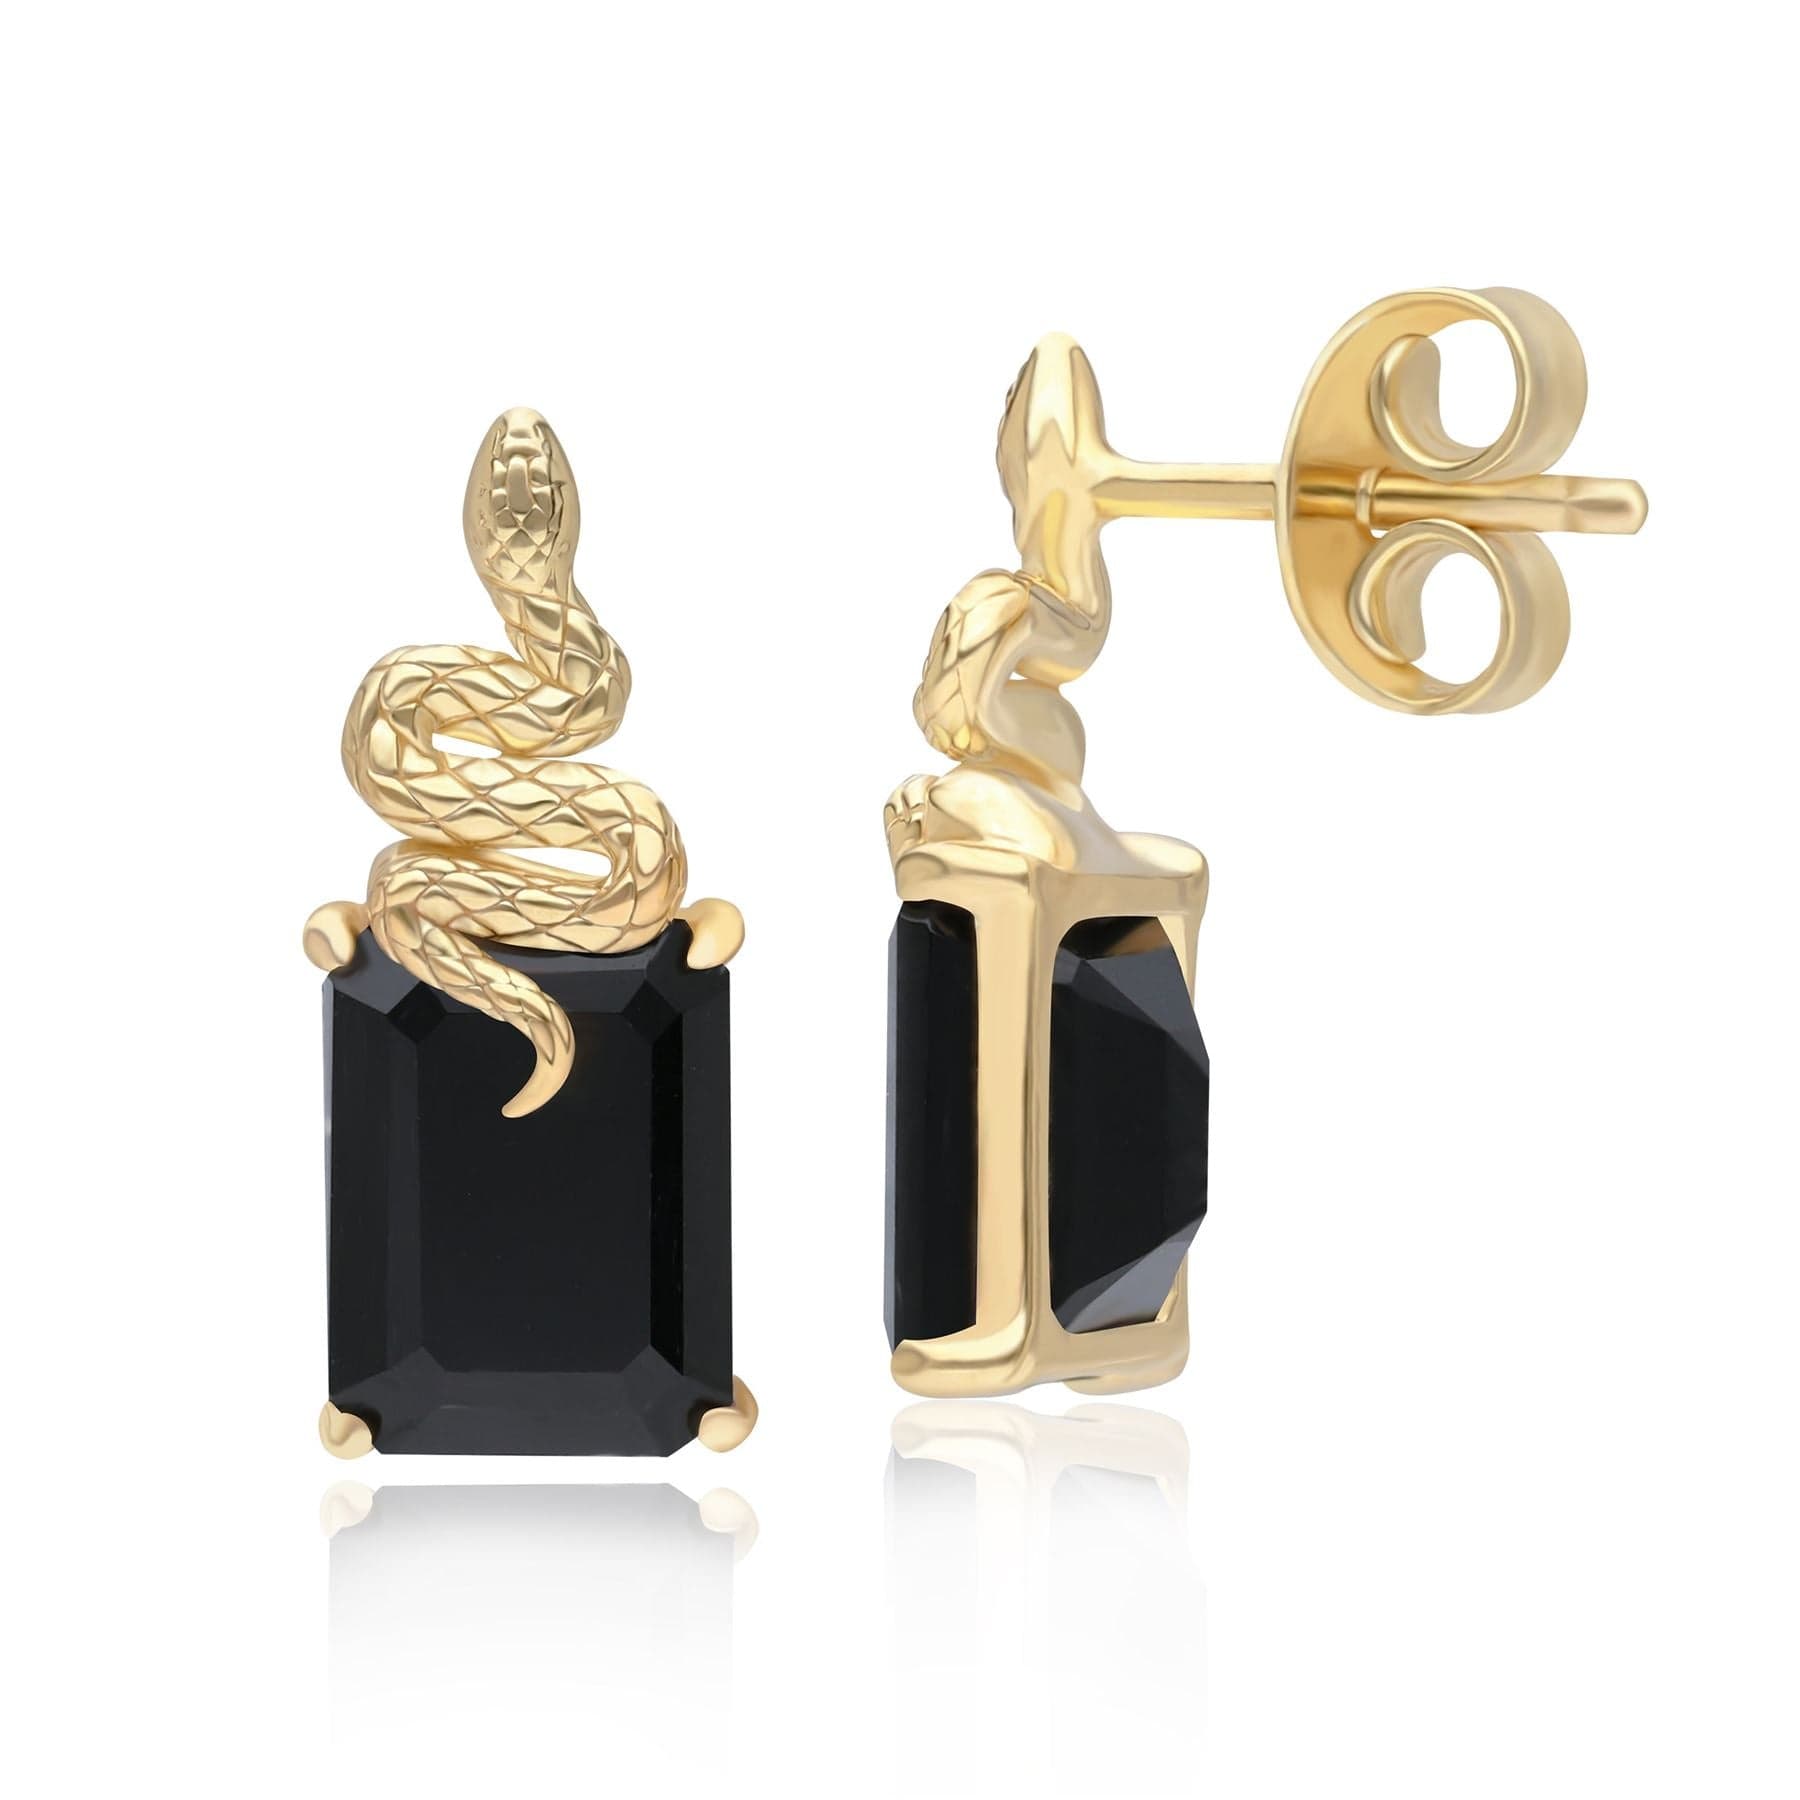 Grand Deco Black Onyx Snake Stud Earrings in Gold Plated Sterling Silver - Gemondo